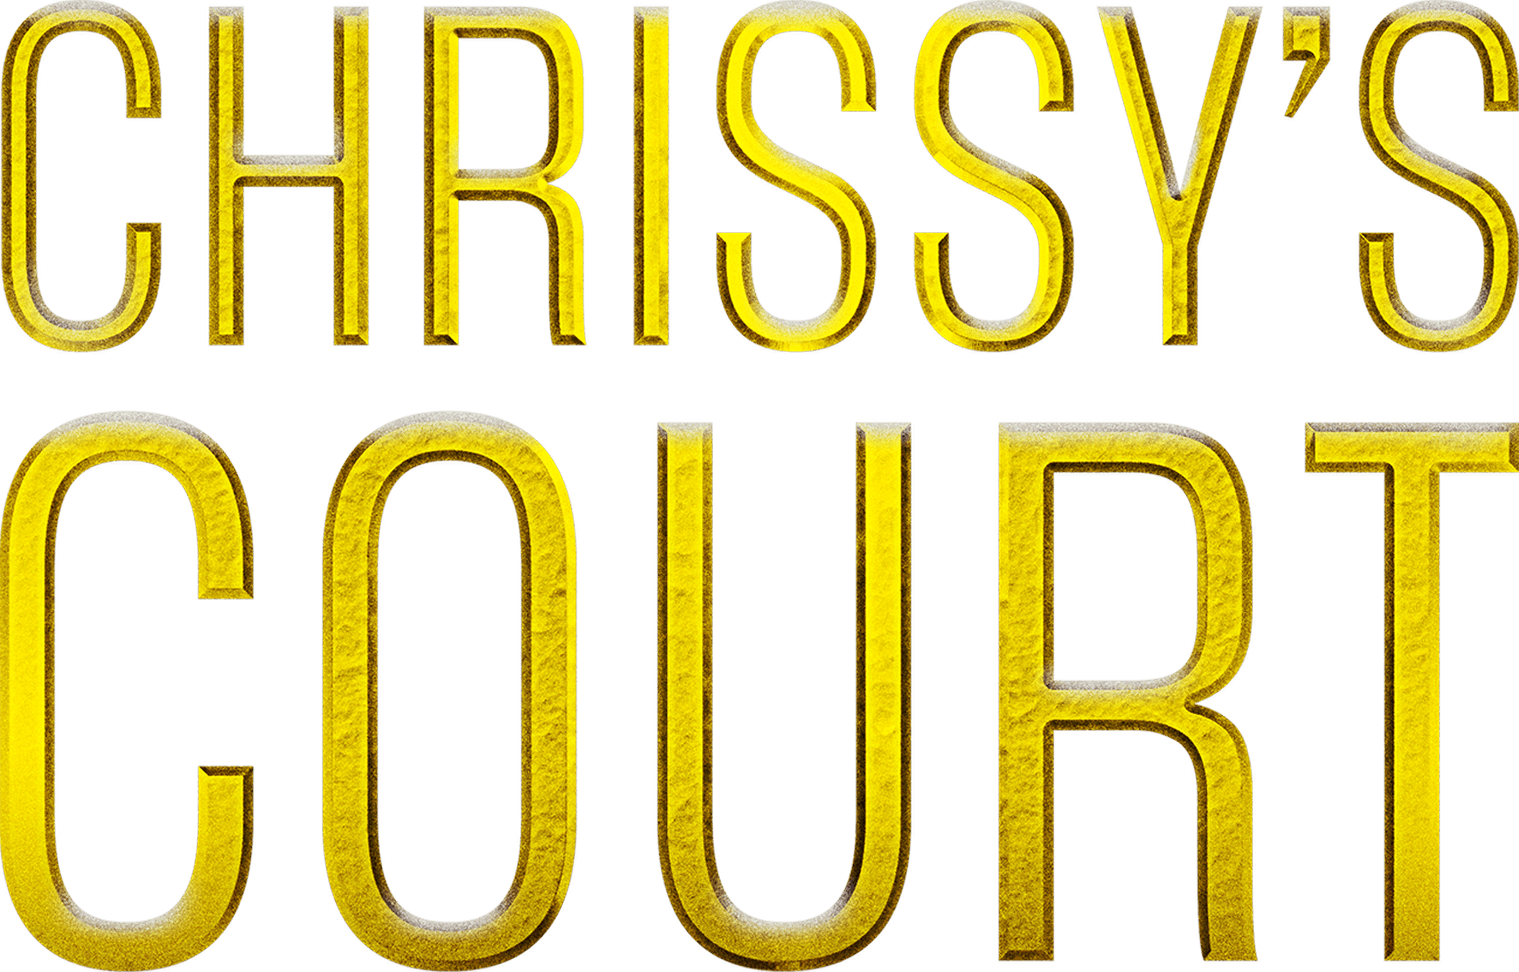 Chrissy's Court logo